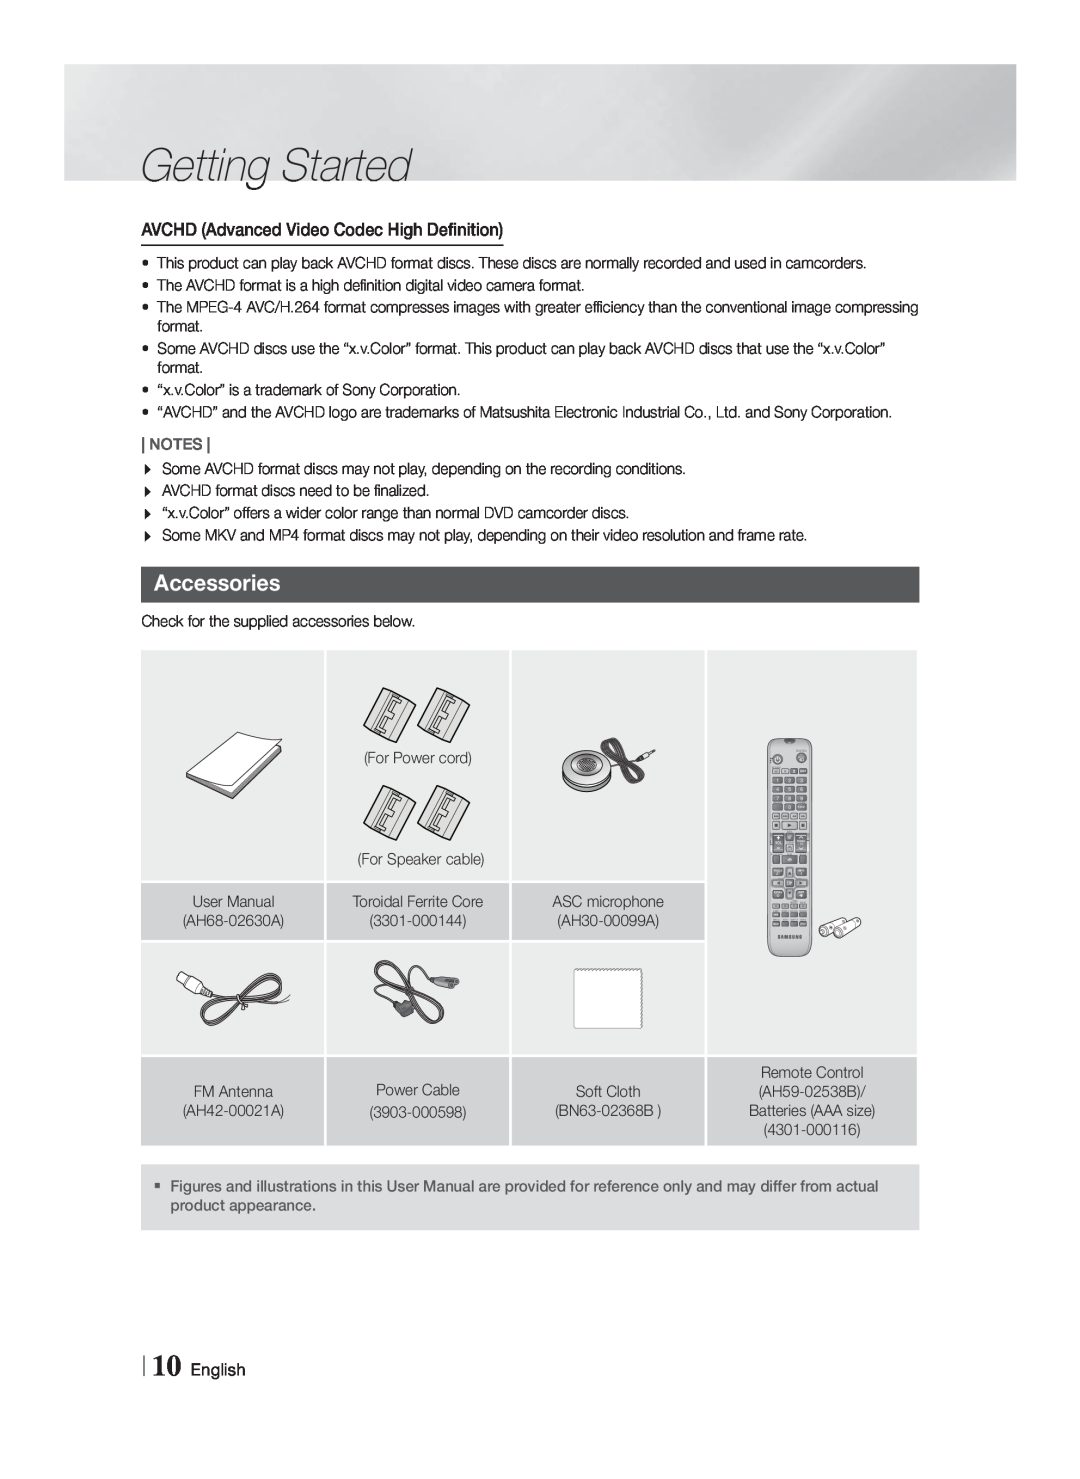 Samsung HT-F9730W/ZA user manual Accessories, Getting Started, AVCHD Advanced Video Codec High Definition, 10 English 